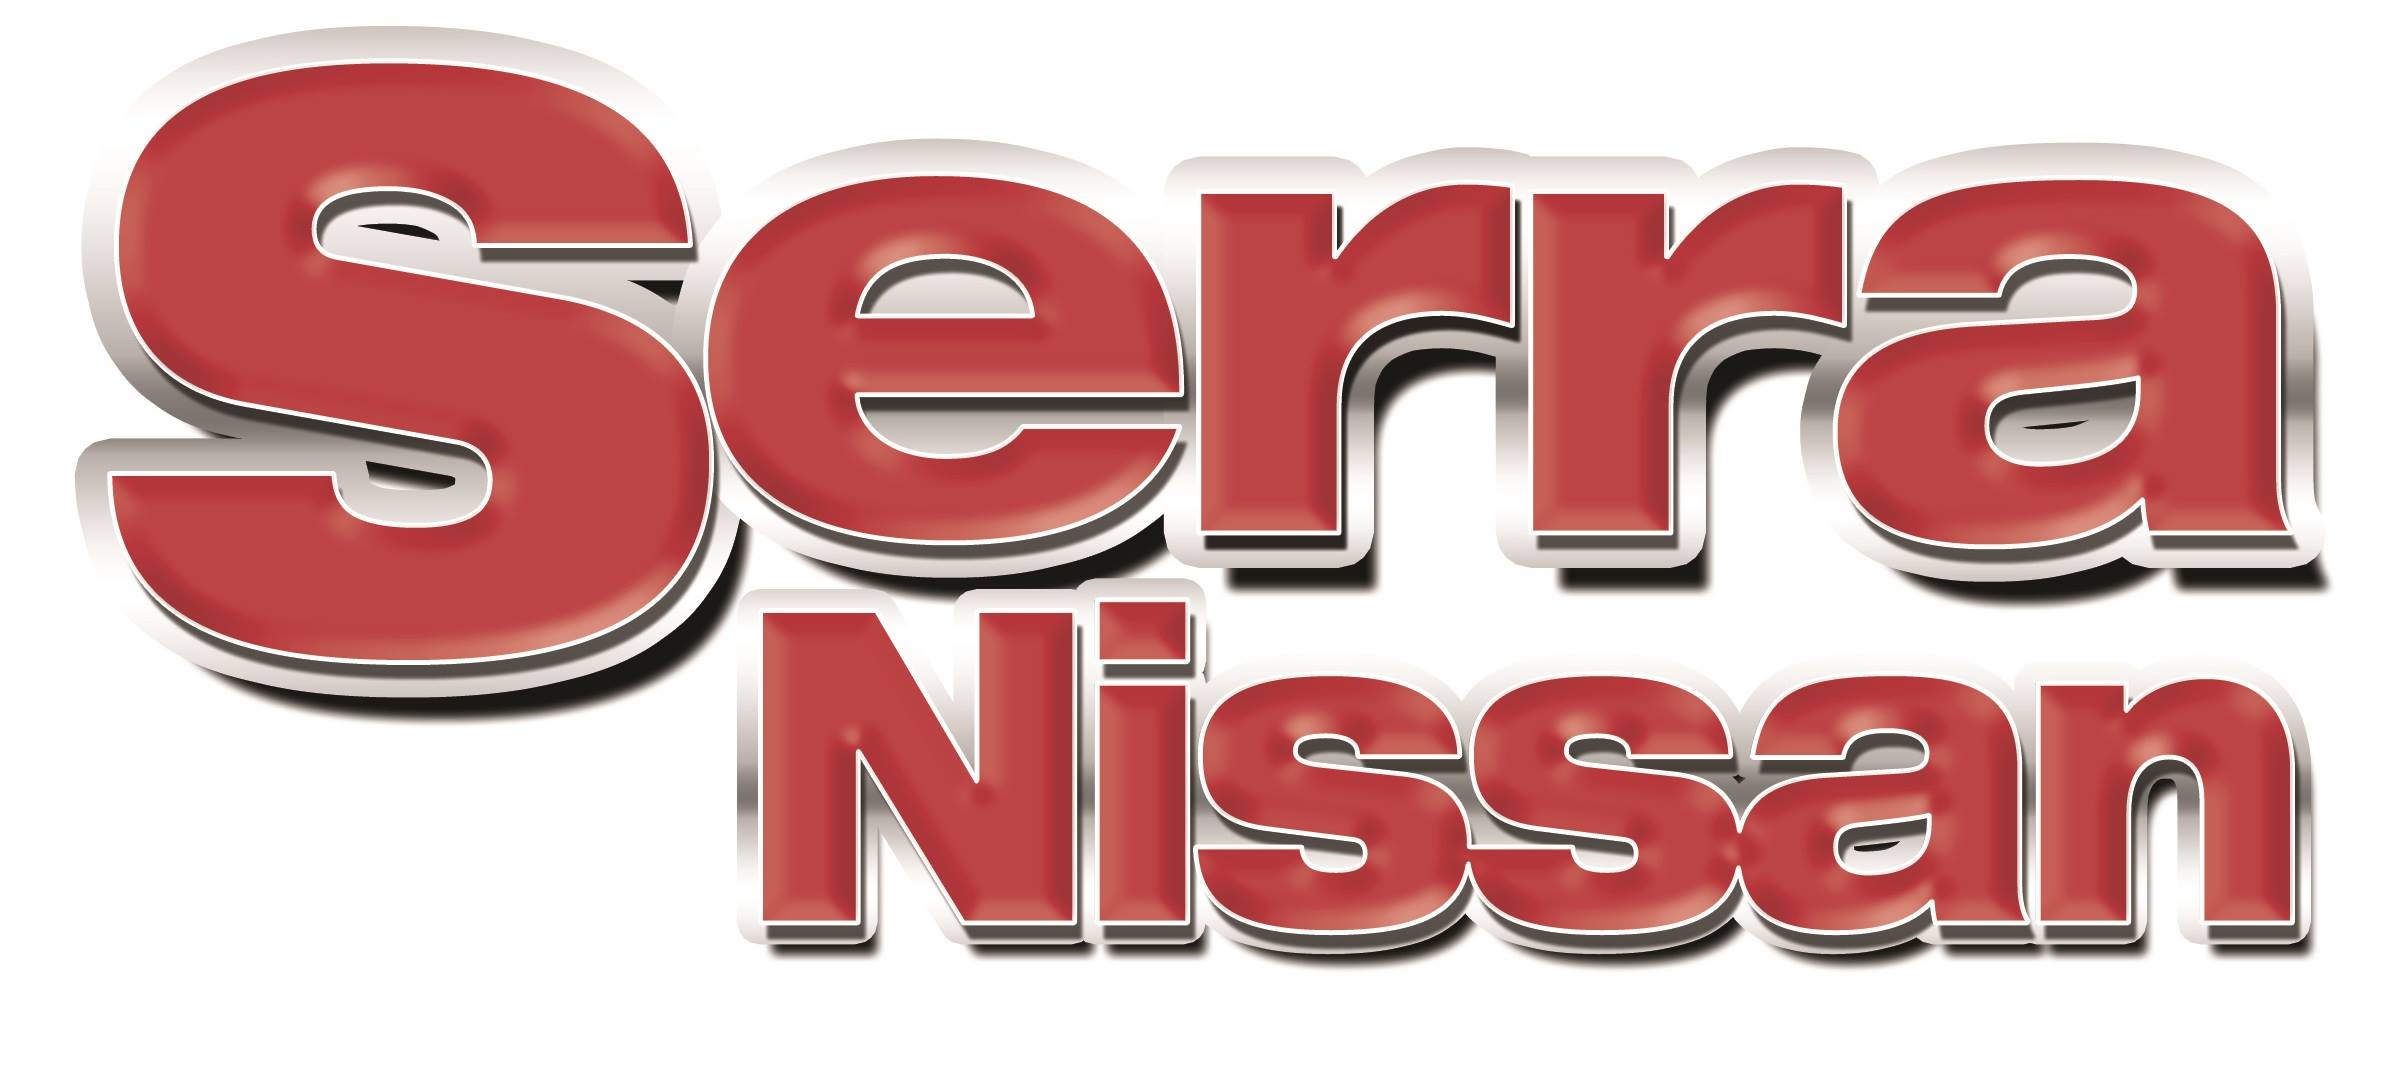 Business logo of Serra Nissan Service